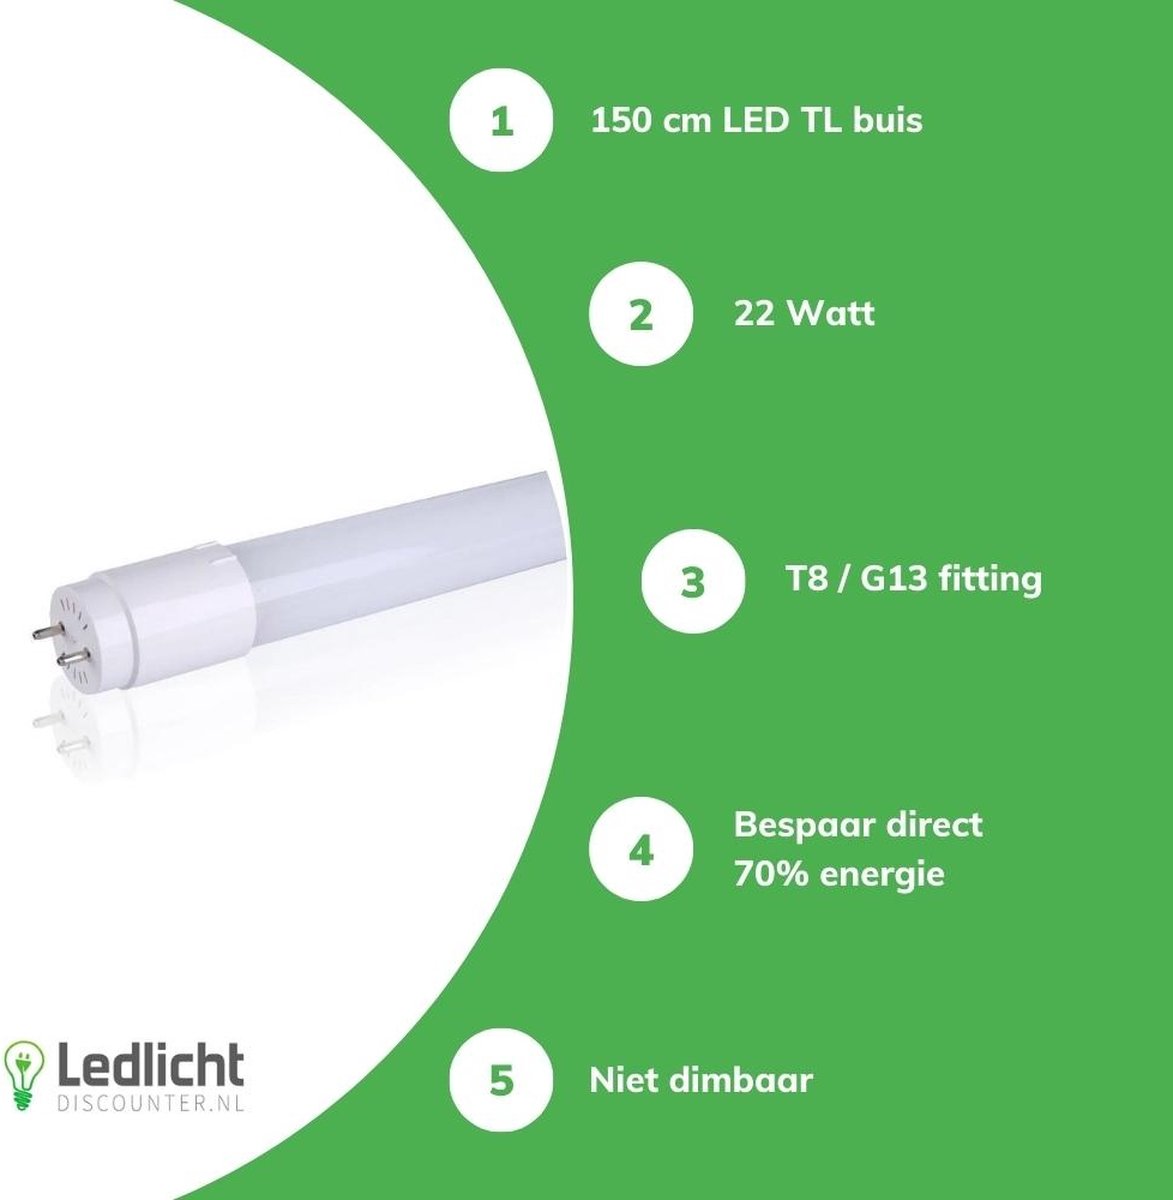 LvT - LED TL ECO - 150cm 24W vervangt 58W - 6000K 865 - daglicht wit - 1  jaar garantie | bol.com